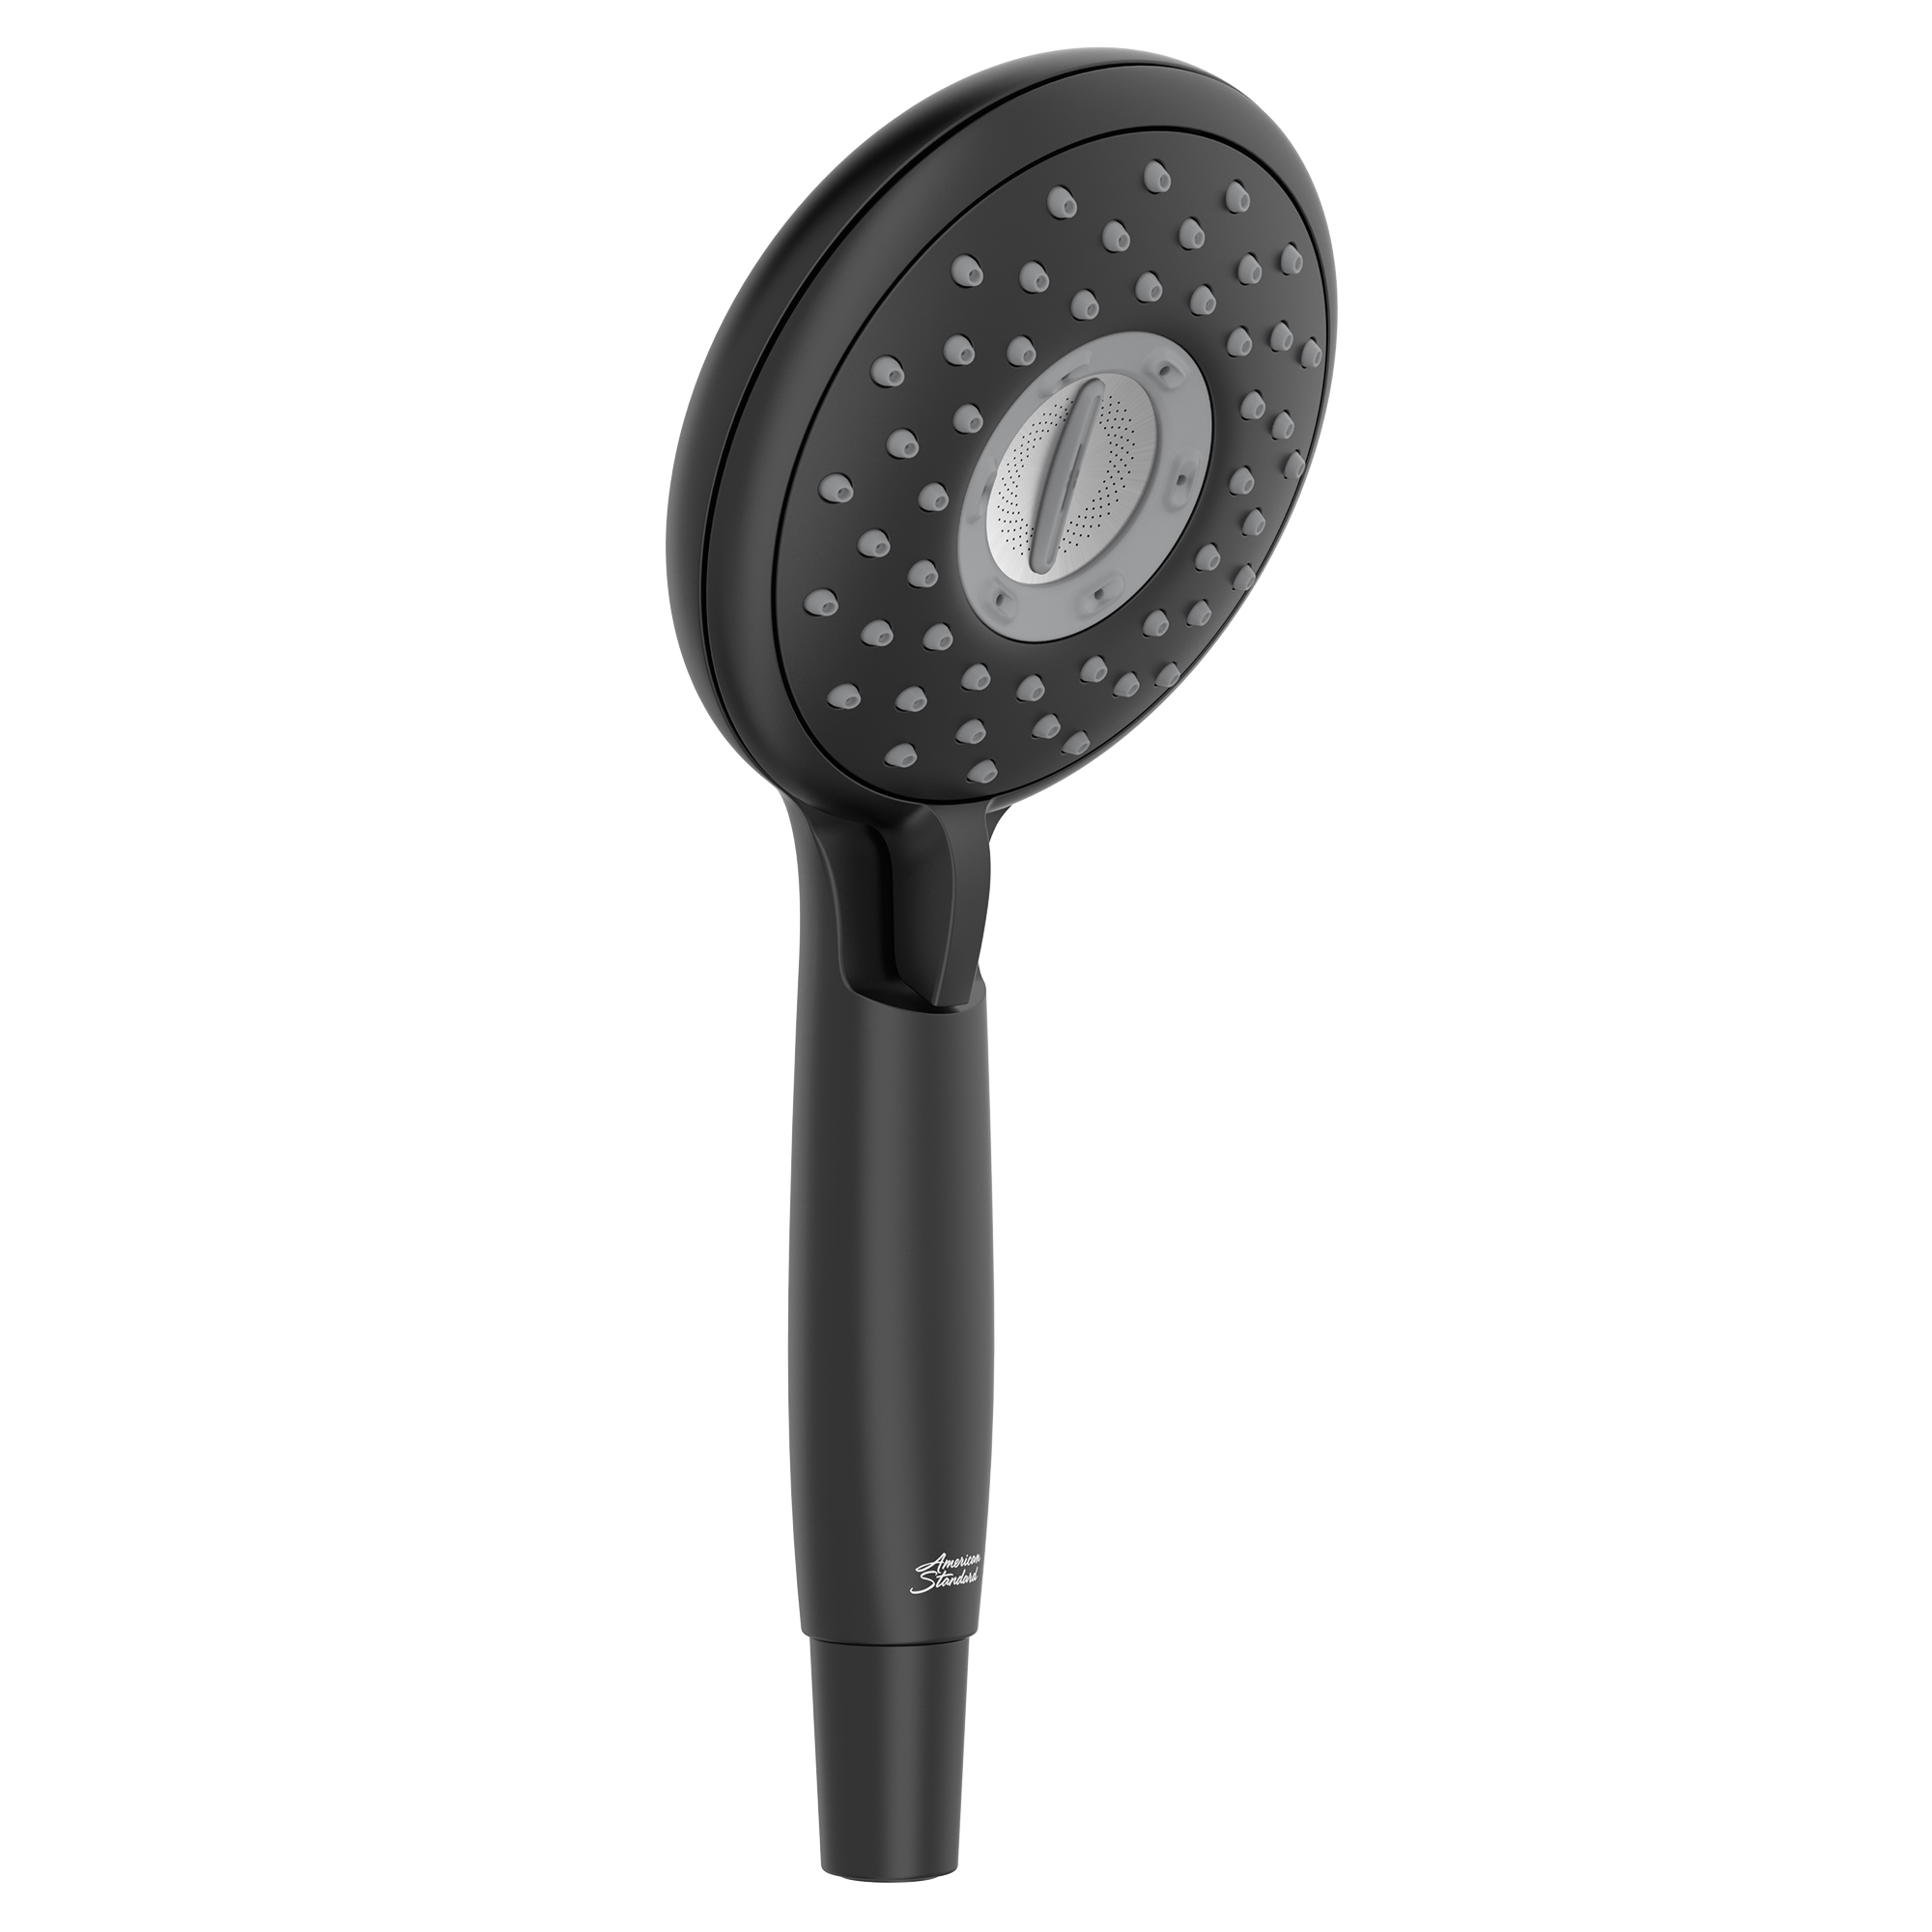 Spectra® Handheld 1.8 gpm/6.8 L/min 5-Inch 4-Function Hand Shower